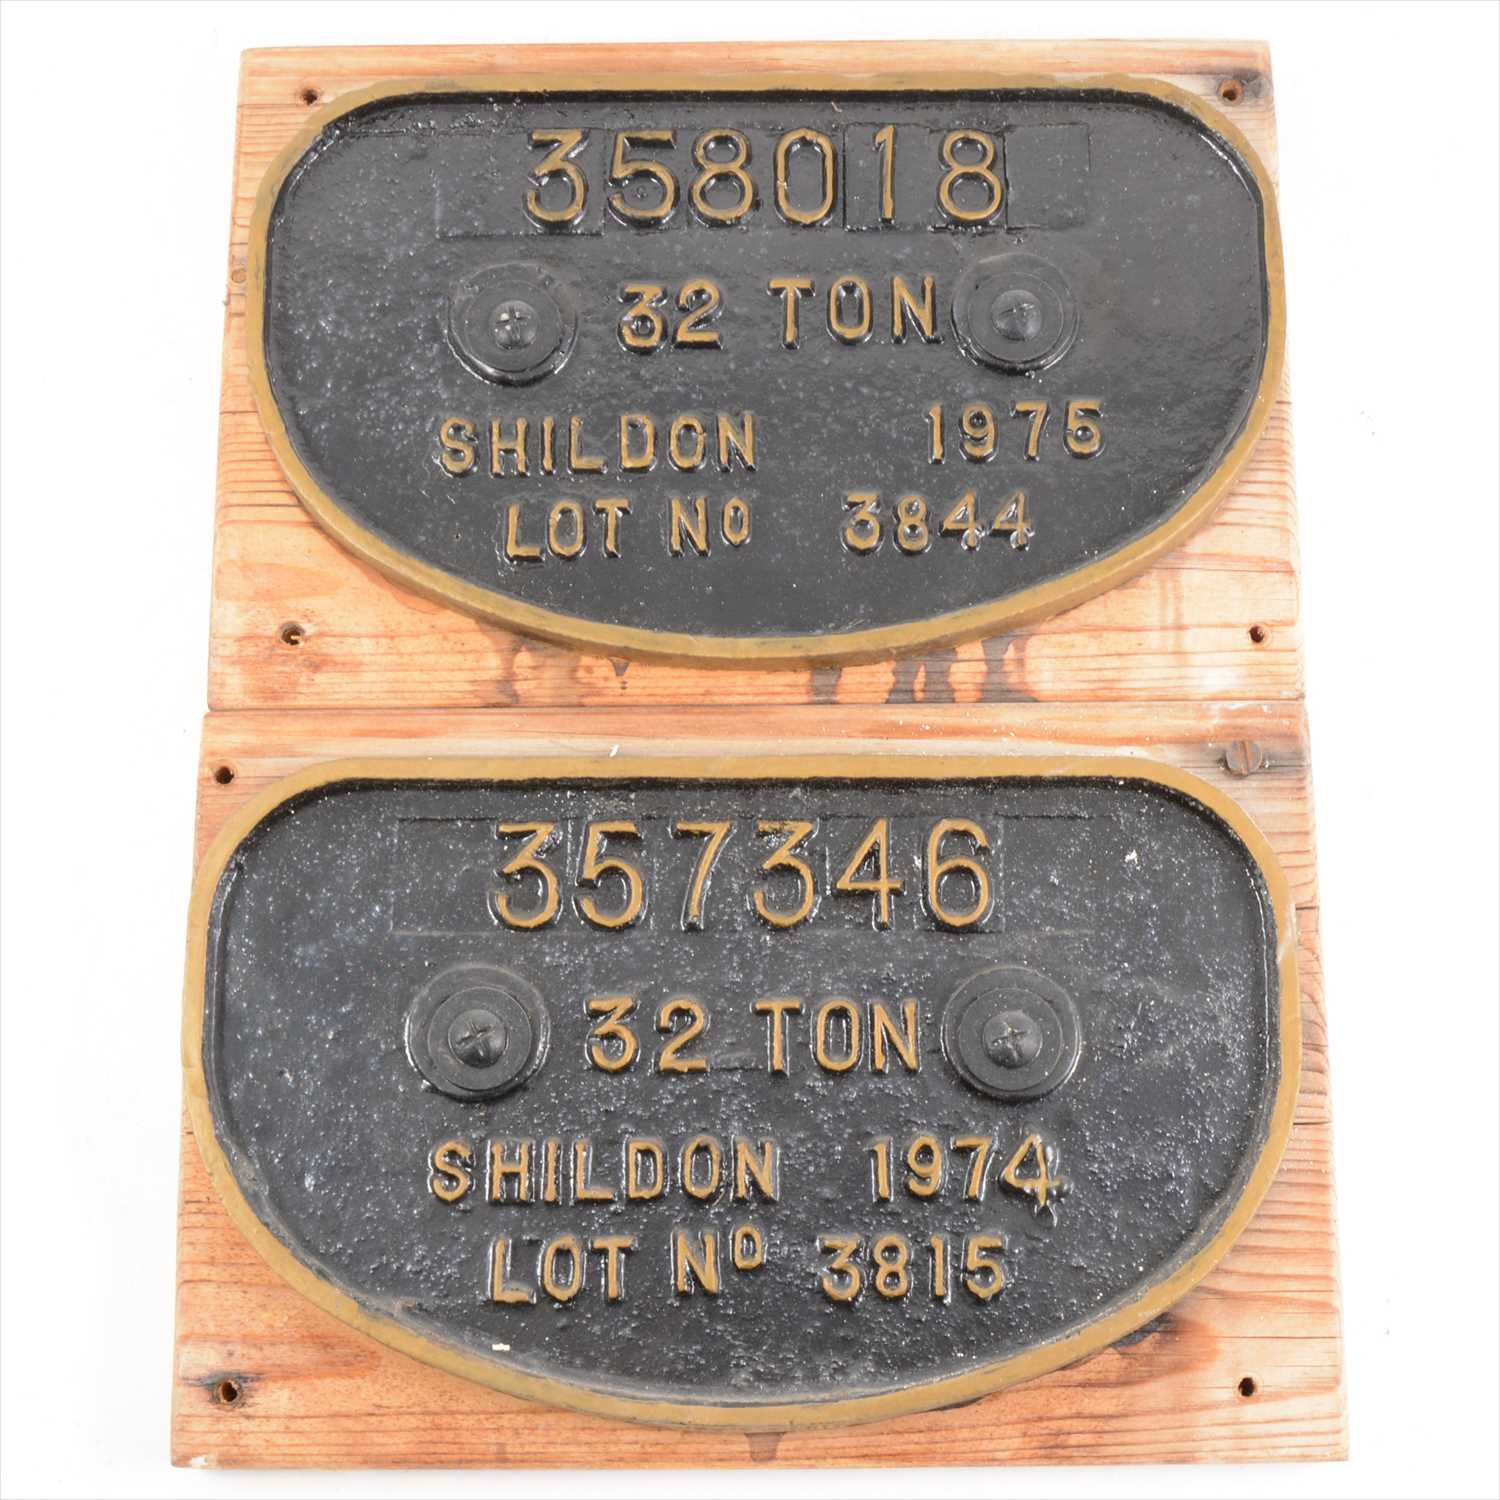 Lot 39 - Two cast iron railway plaques; 358018 32 ton Shildon 1975 lot no 3844, 28cm by 17cm, and a 357346 32 Ton Shildon 1974 lot no 3815, 28cm by 17cm, both mounted on wood.